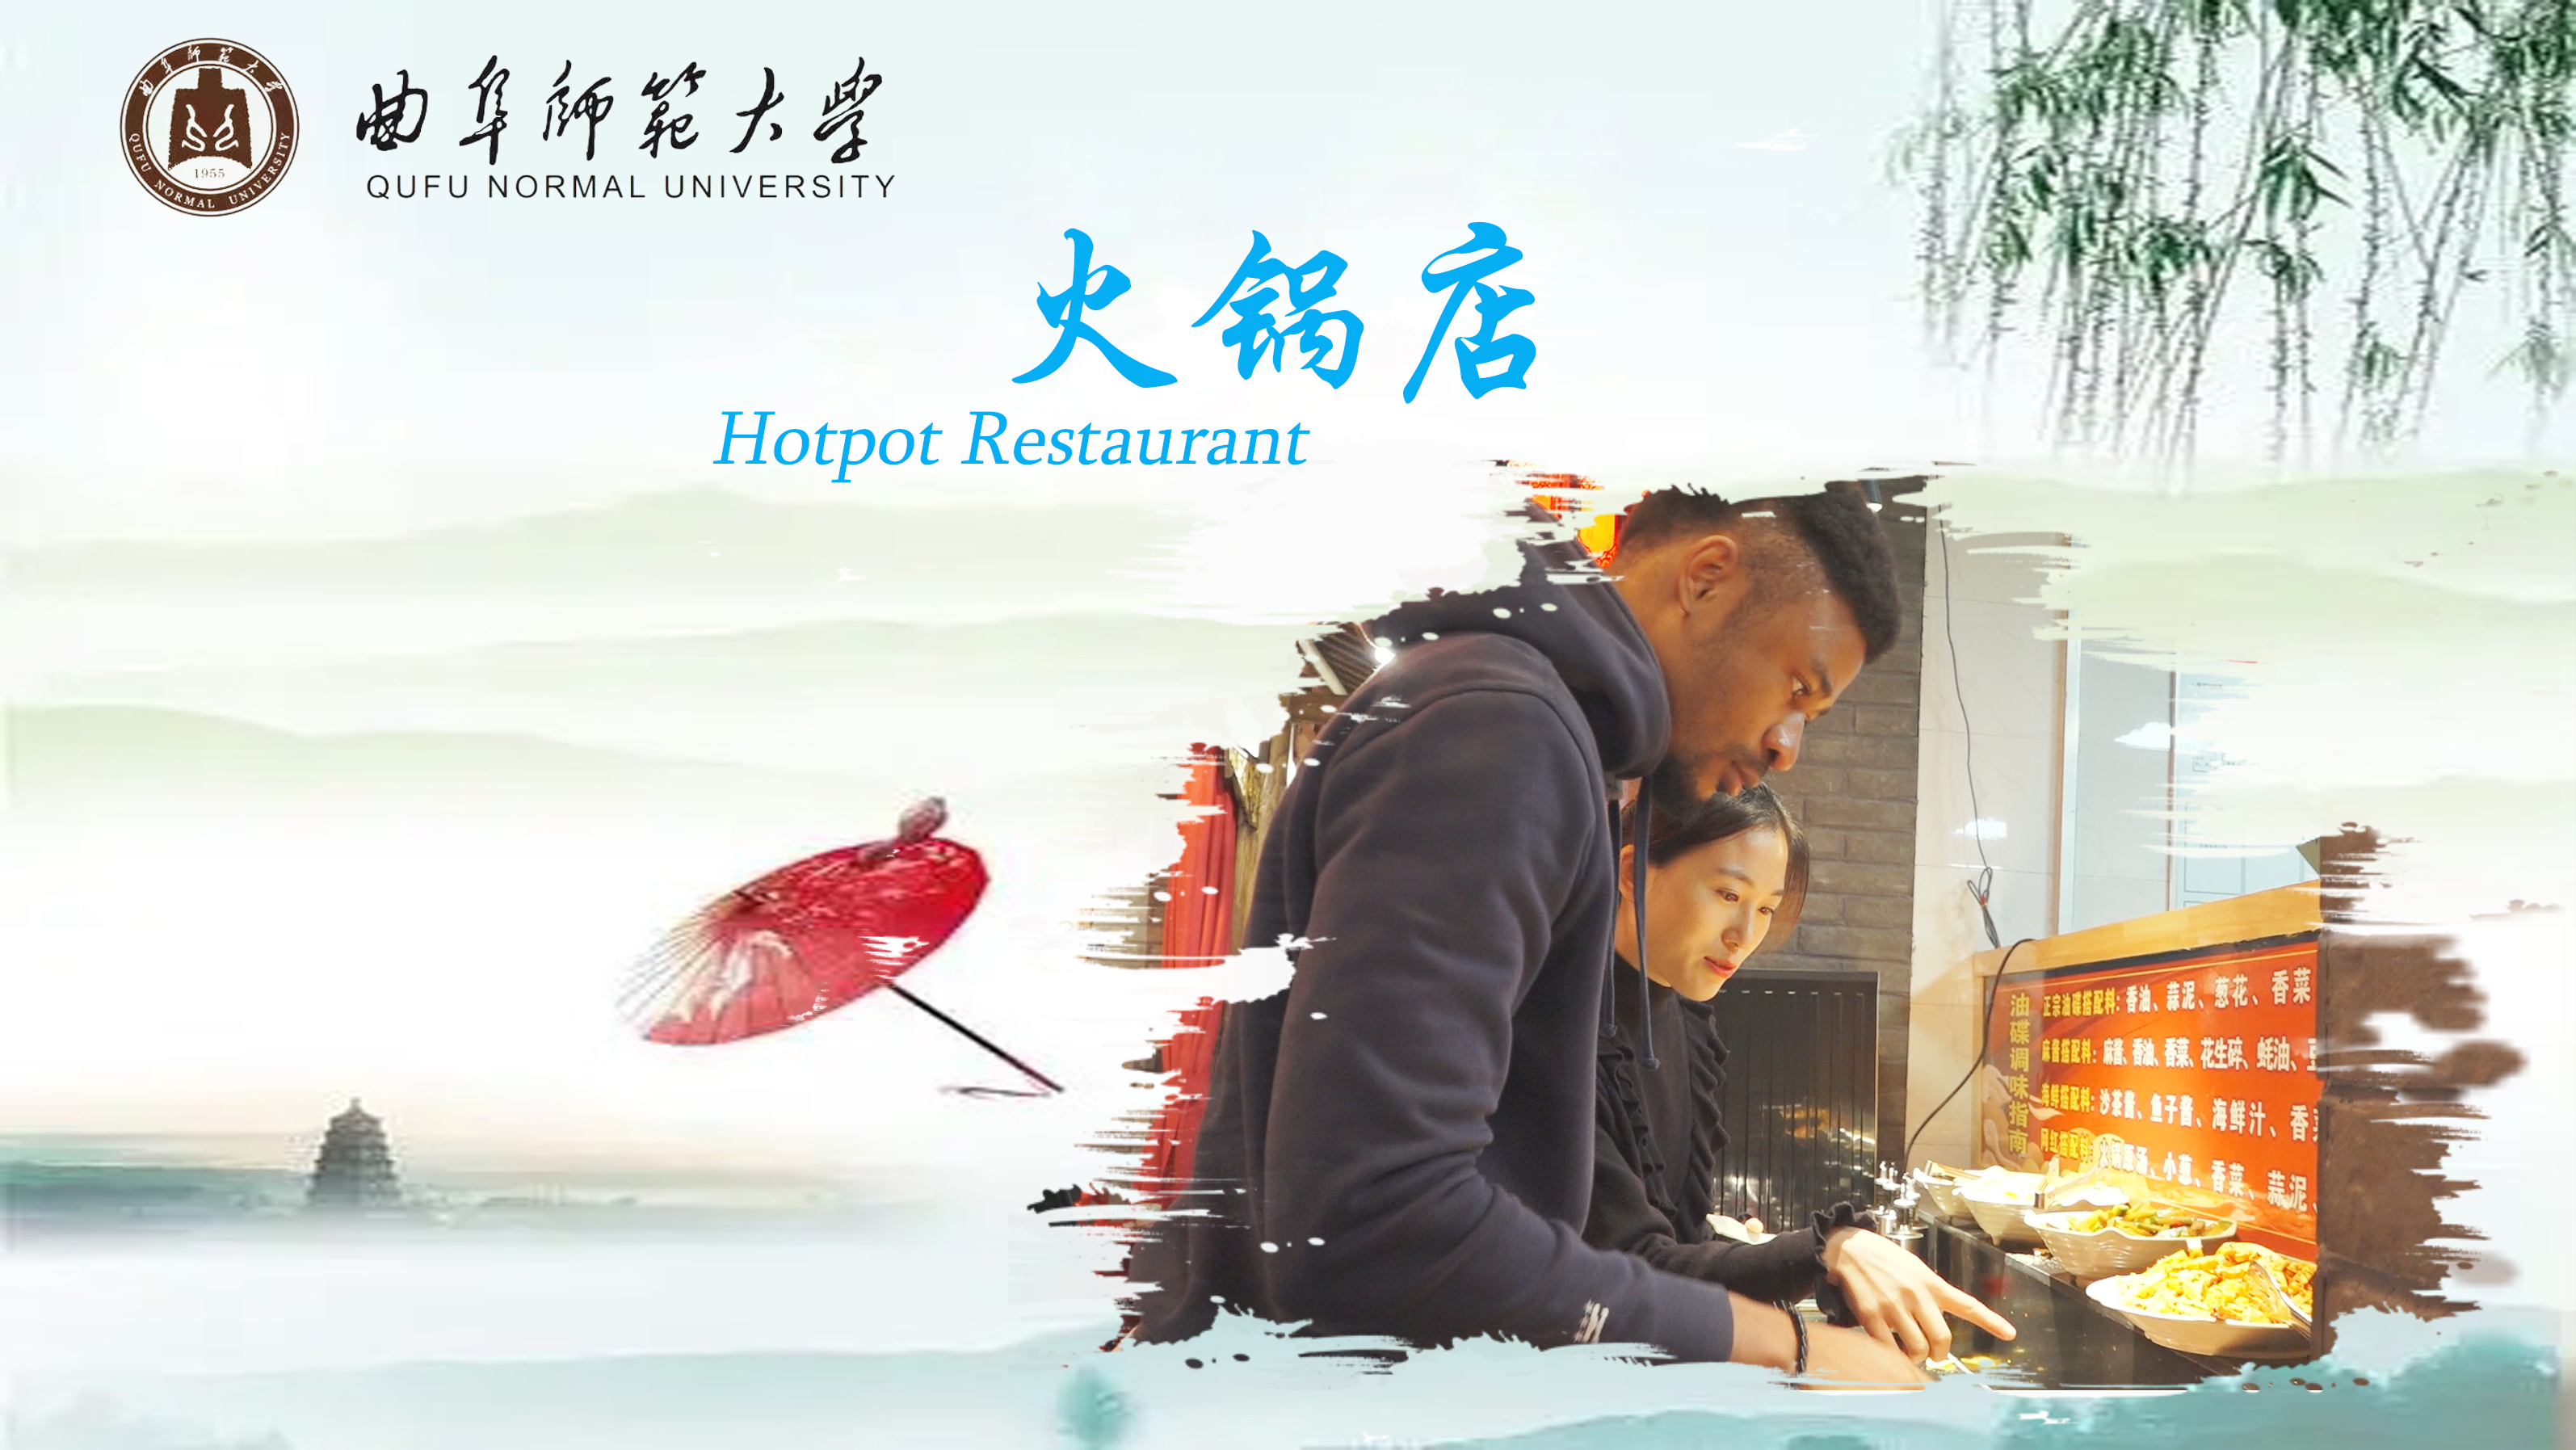 Hotpot Restaurant